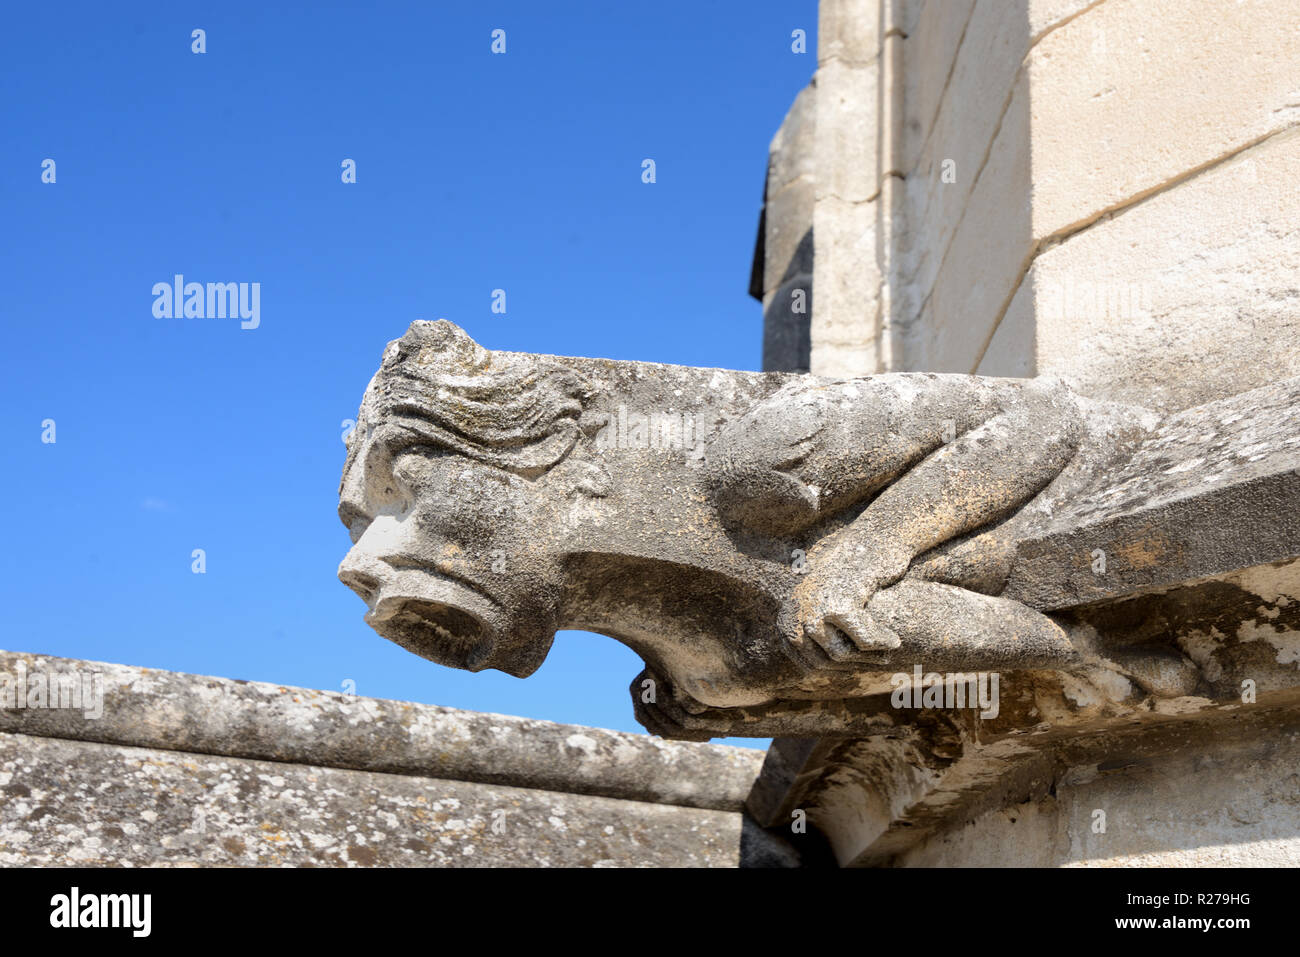 Fabeltier, das Geschöpf oder grotesk Gargoyle Palais des Papes, Päpstliche Palast oder Palast der Päpste Avignon Provence Frankreich Stockfoto